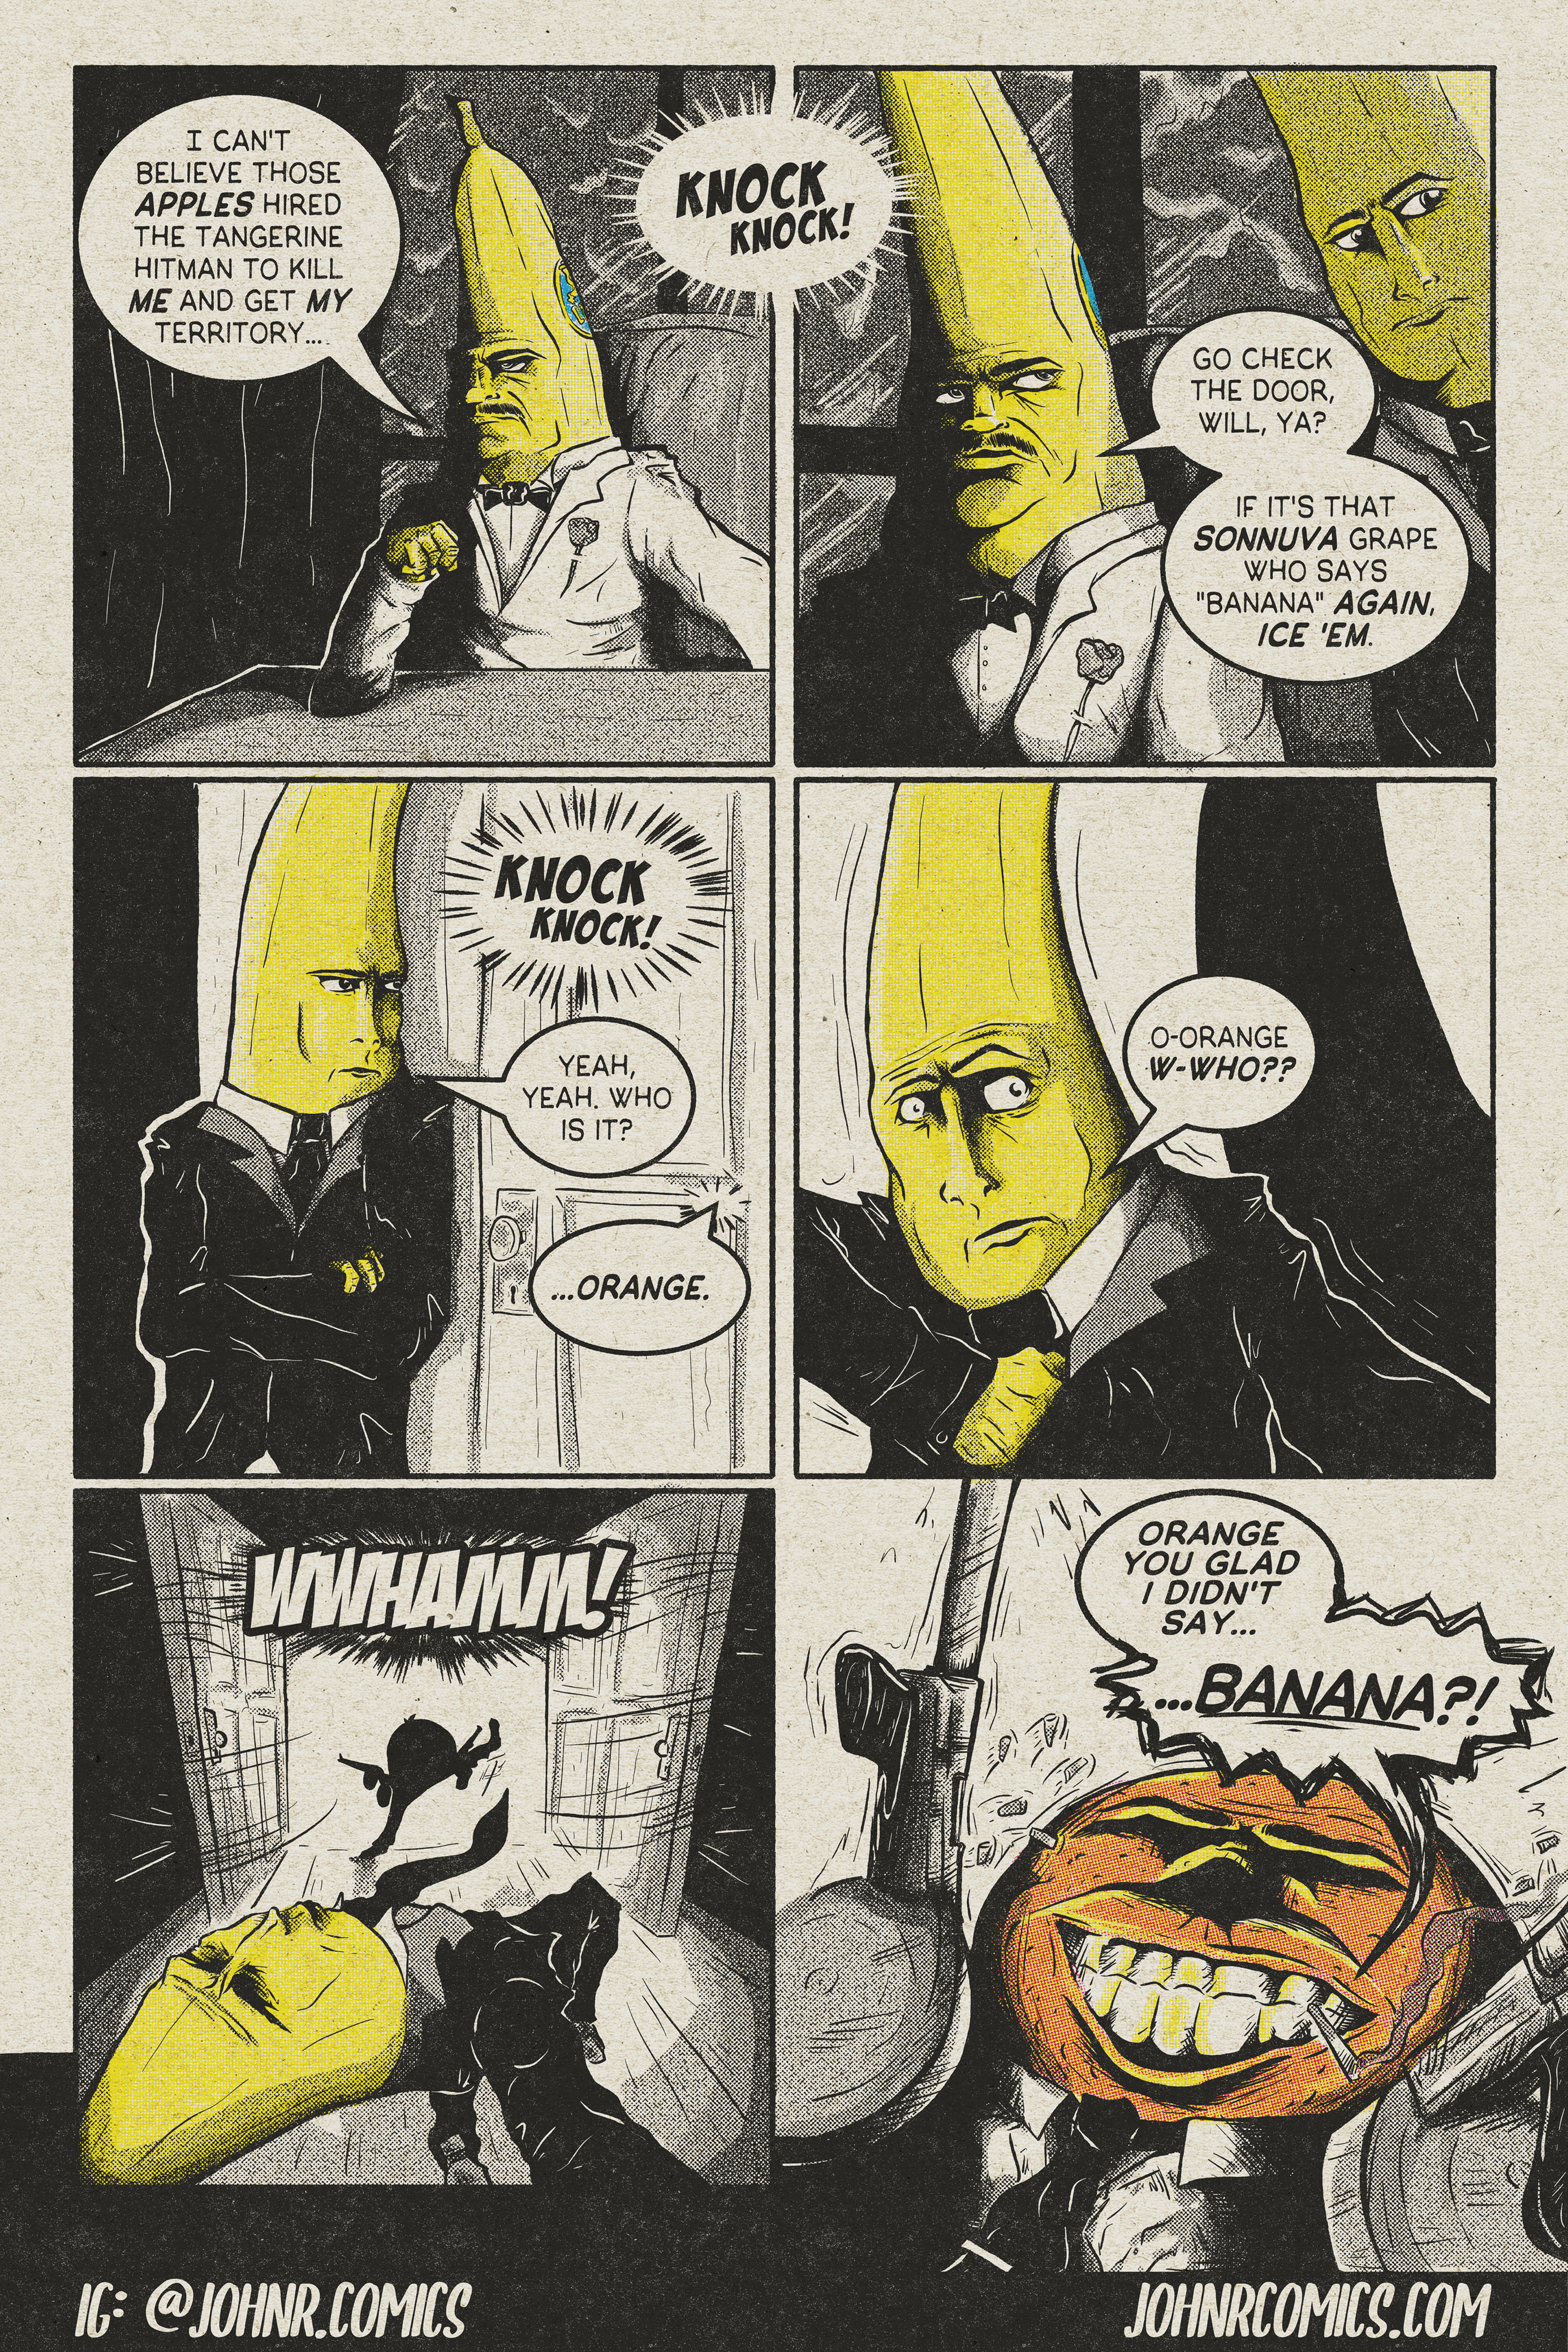 Banana crime.